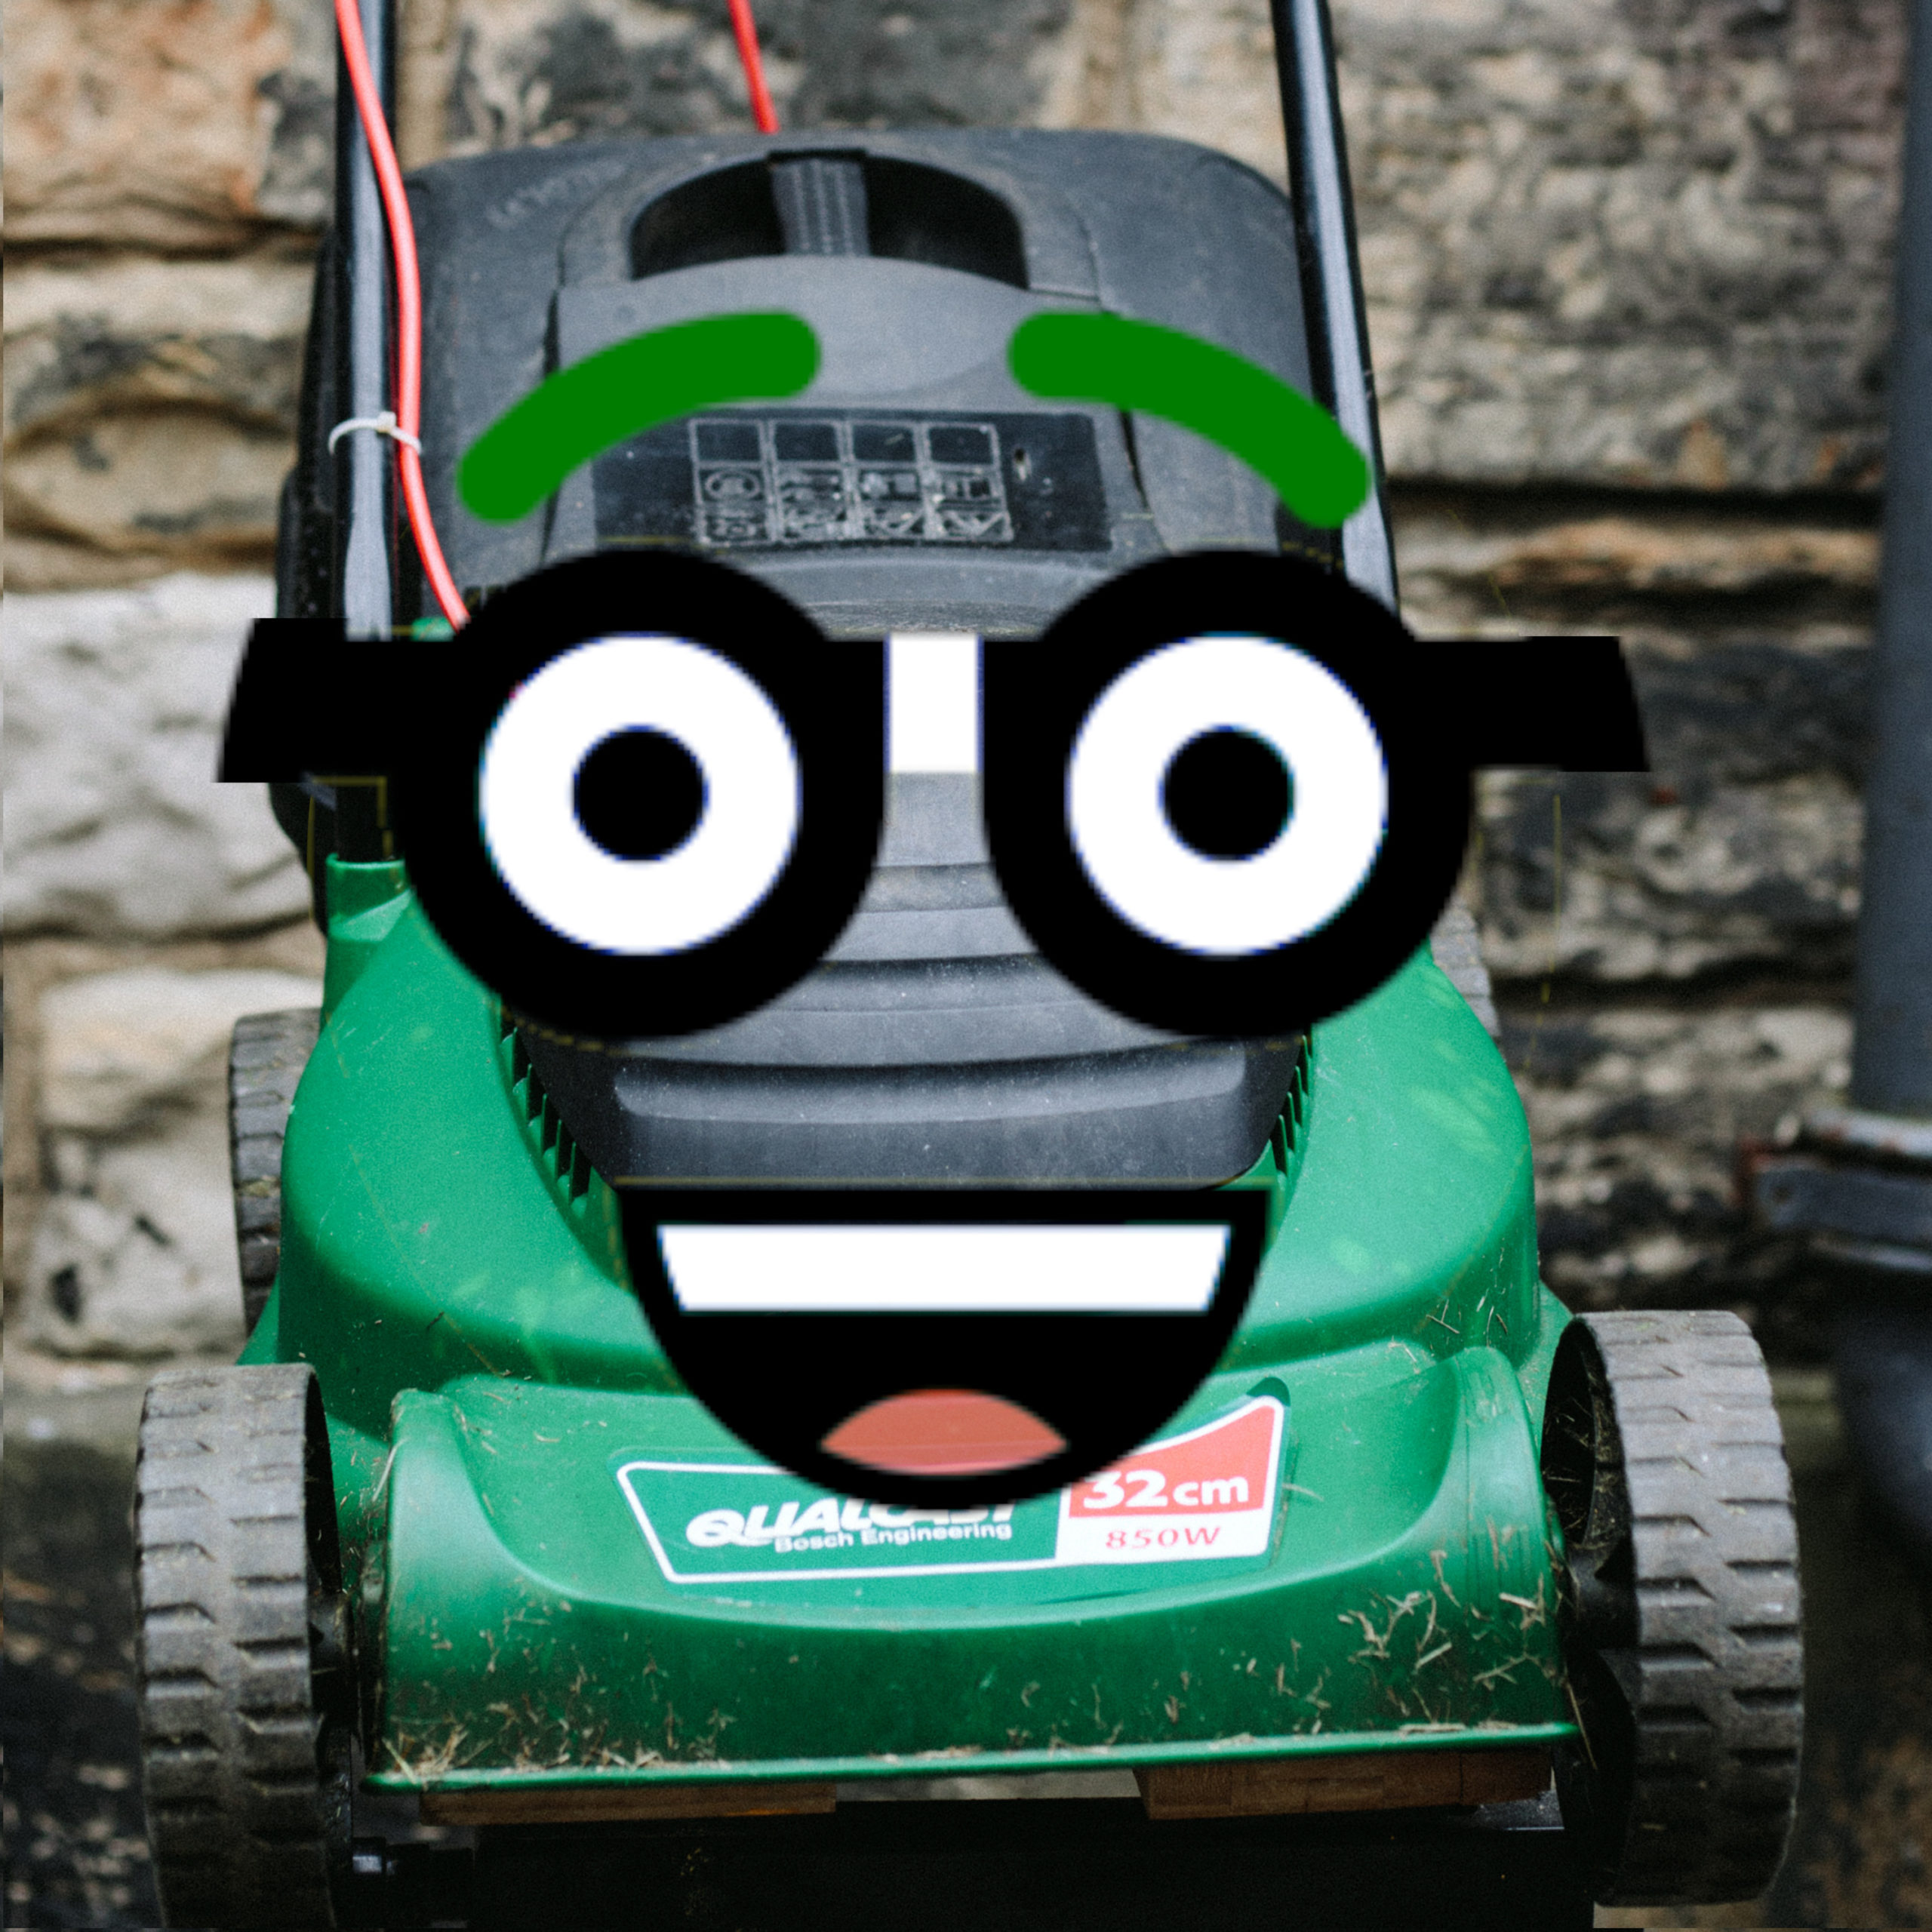 Meet Douglas the Electric Lawn Mower 1